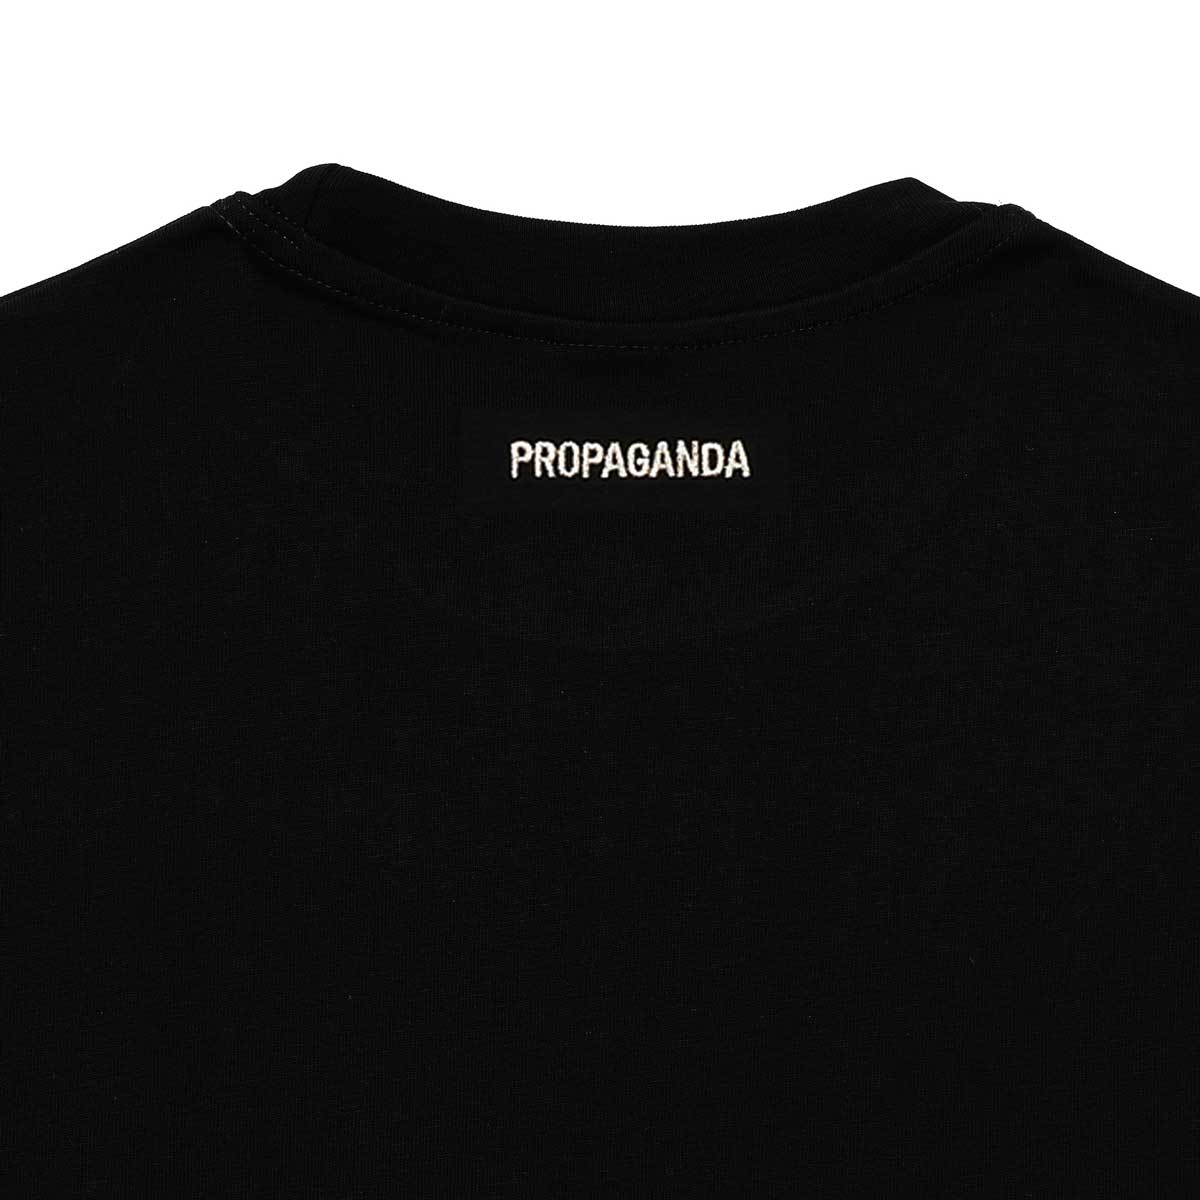 PRTS405 - T-Shirt e Polo - Propaganda